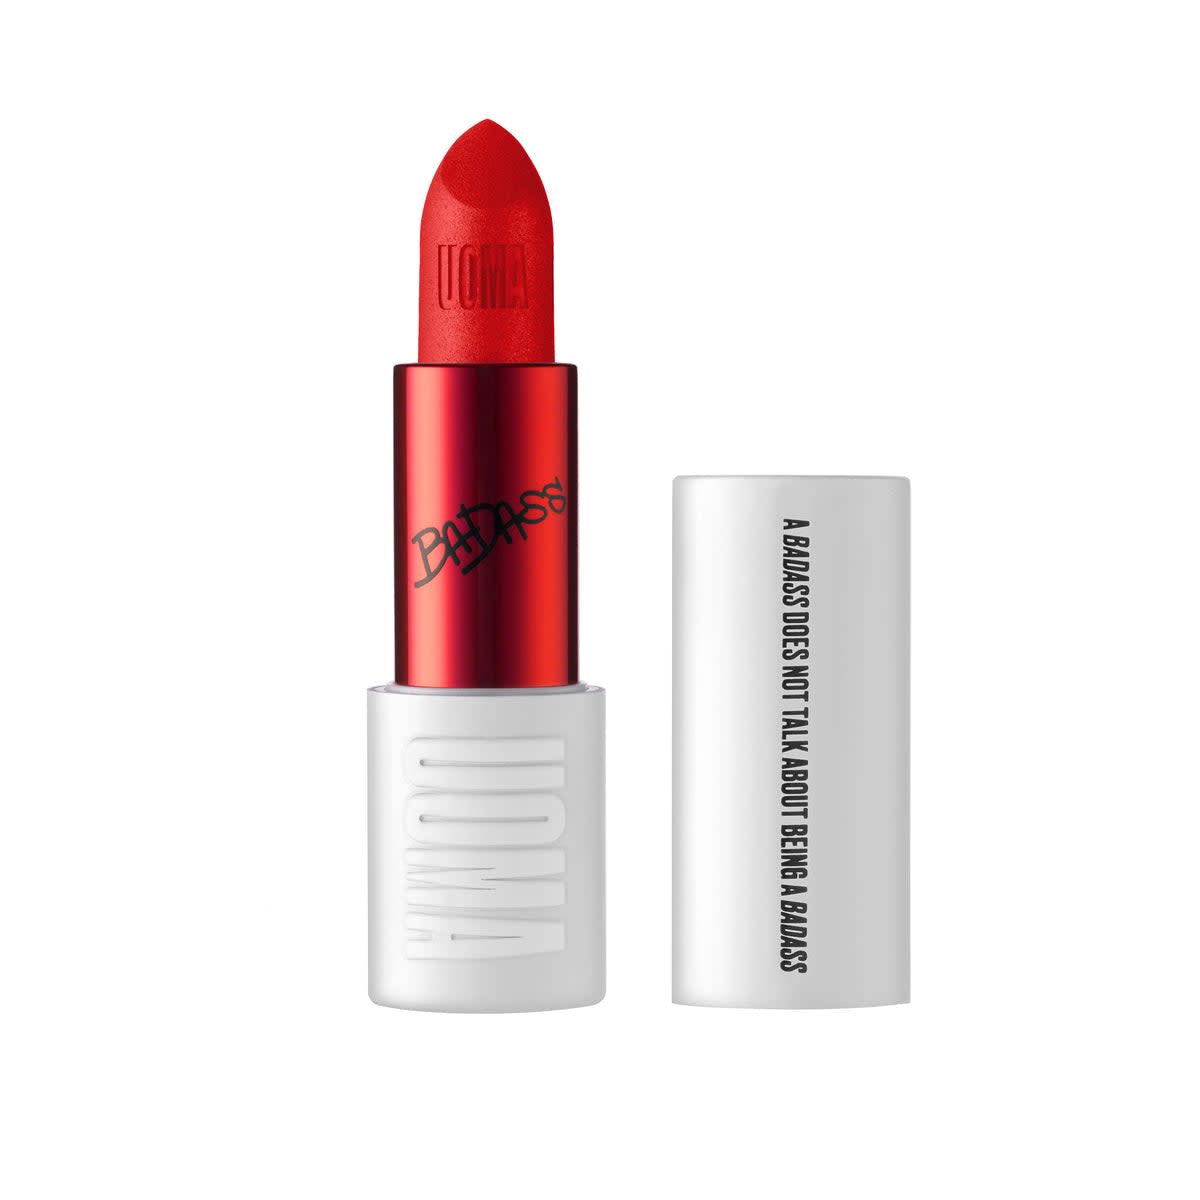 Uoma Beauty Badass Icon Matte Lipstick in Sade